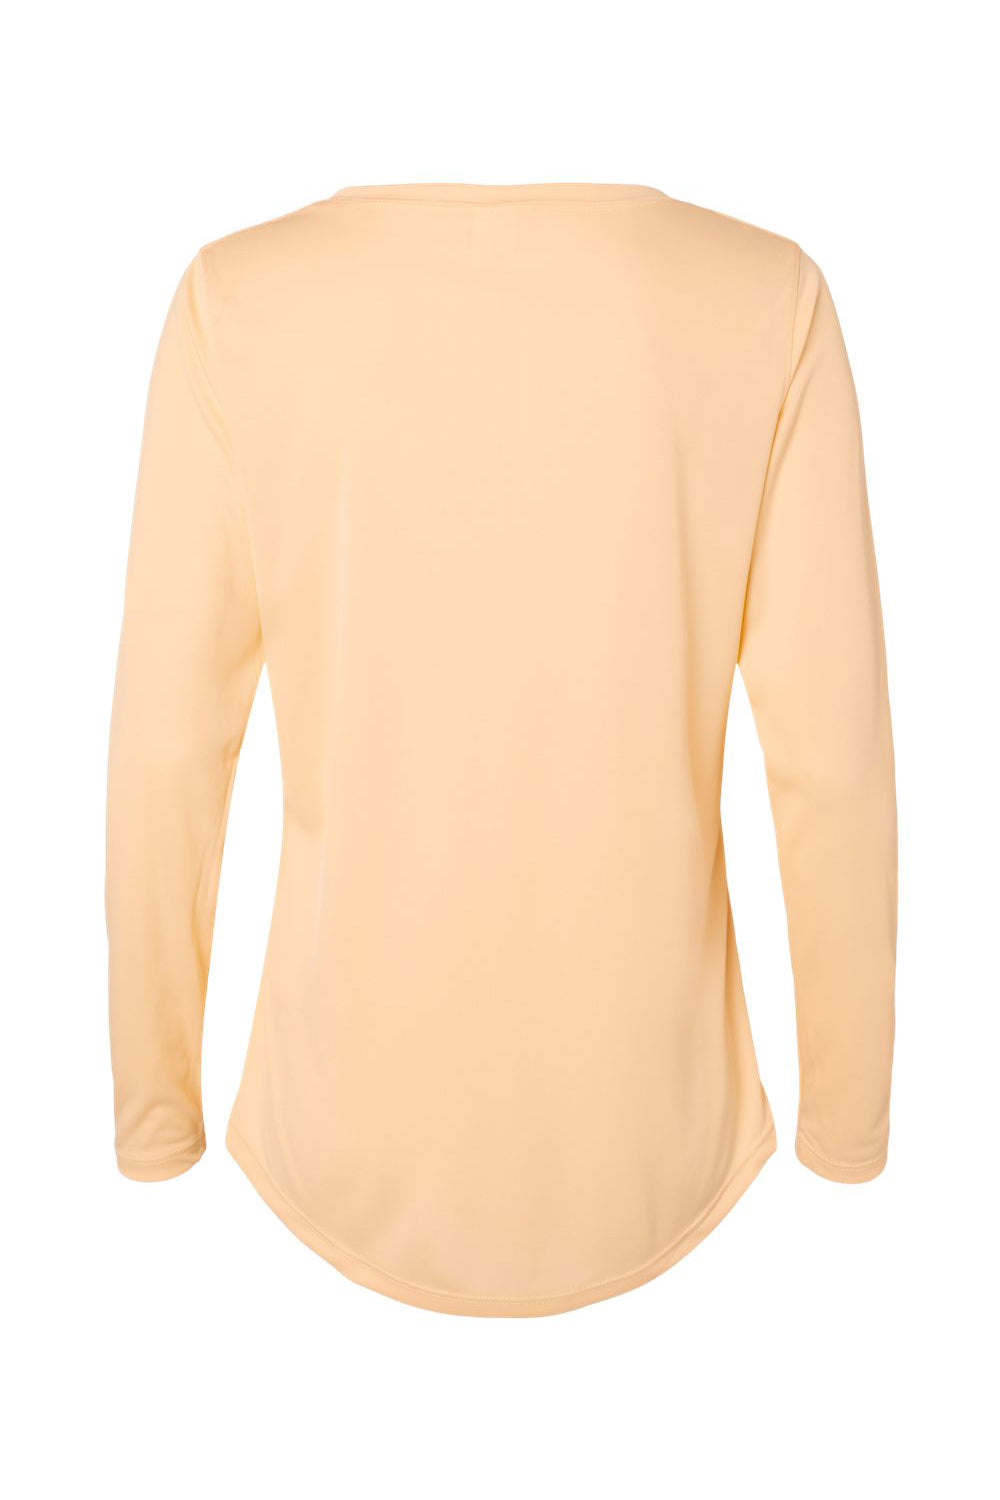 Paragon 214 Womens Islander Performance Long Sleeve Scoop Neck T-Shirt Peach Flat Back